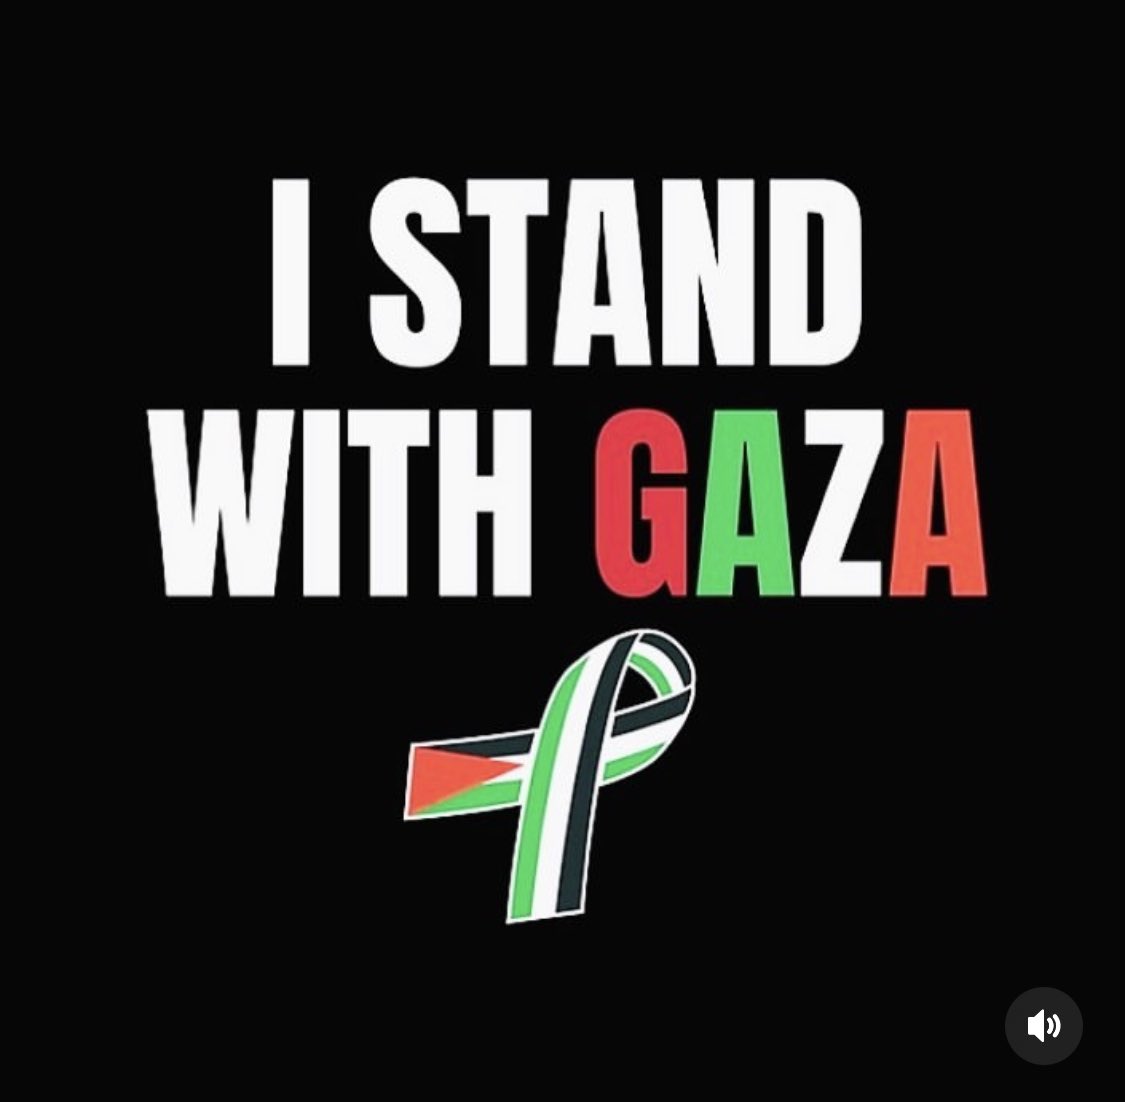 #israelcrimes
#boycottisrael #bds
#boycottdivestmentsanctions
#boycottisraelproducts
#boycottisraelapartheid
#settlercolonialism
#genocideingaza #gaza
#gazaunderattack #freegaza #palestinelivesmatter
#palestinians
#palestinianlivesmatter
#palestine #palestinelives